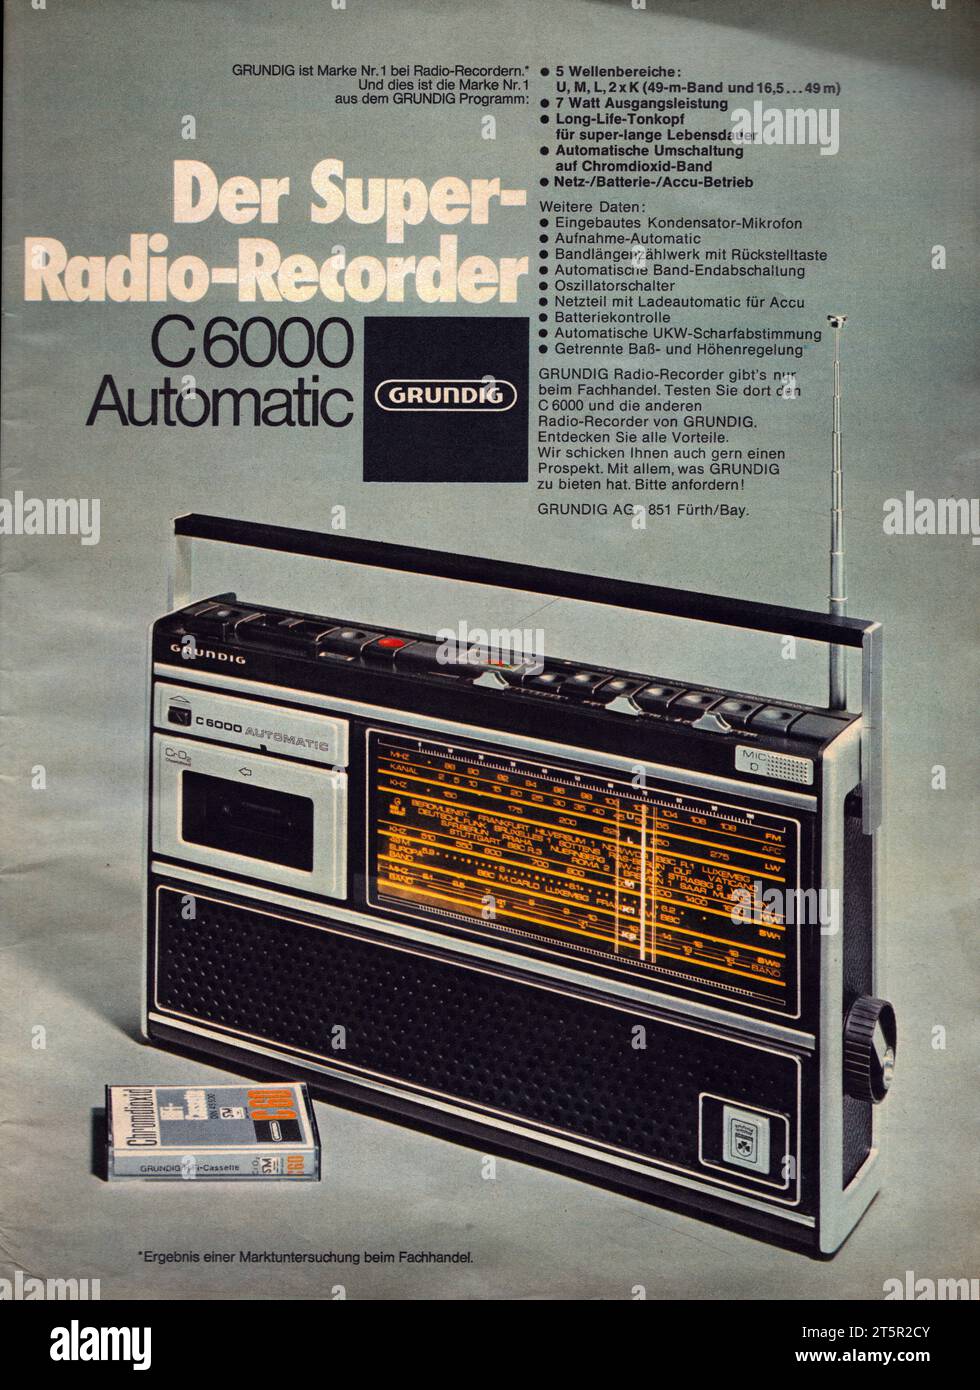 Grundig Radio-Recorder C6000 Automatic German vintage advertisement Grundig commercial 1974 Stock Photo